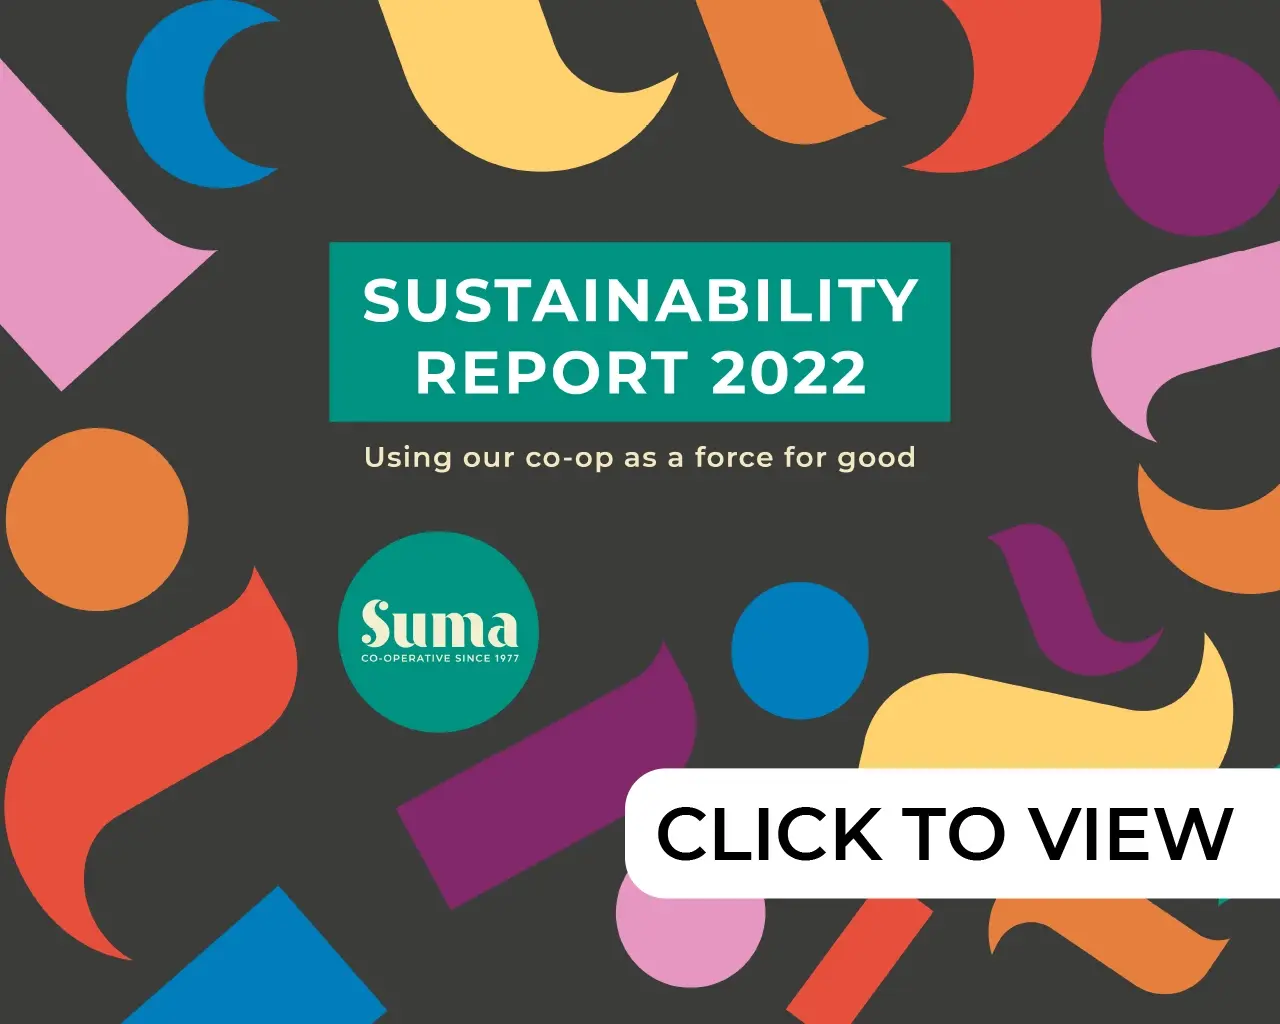 Suma's Sustainability report